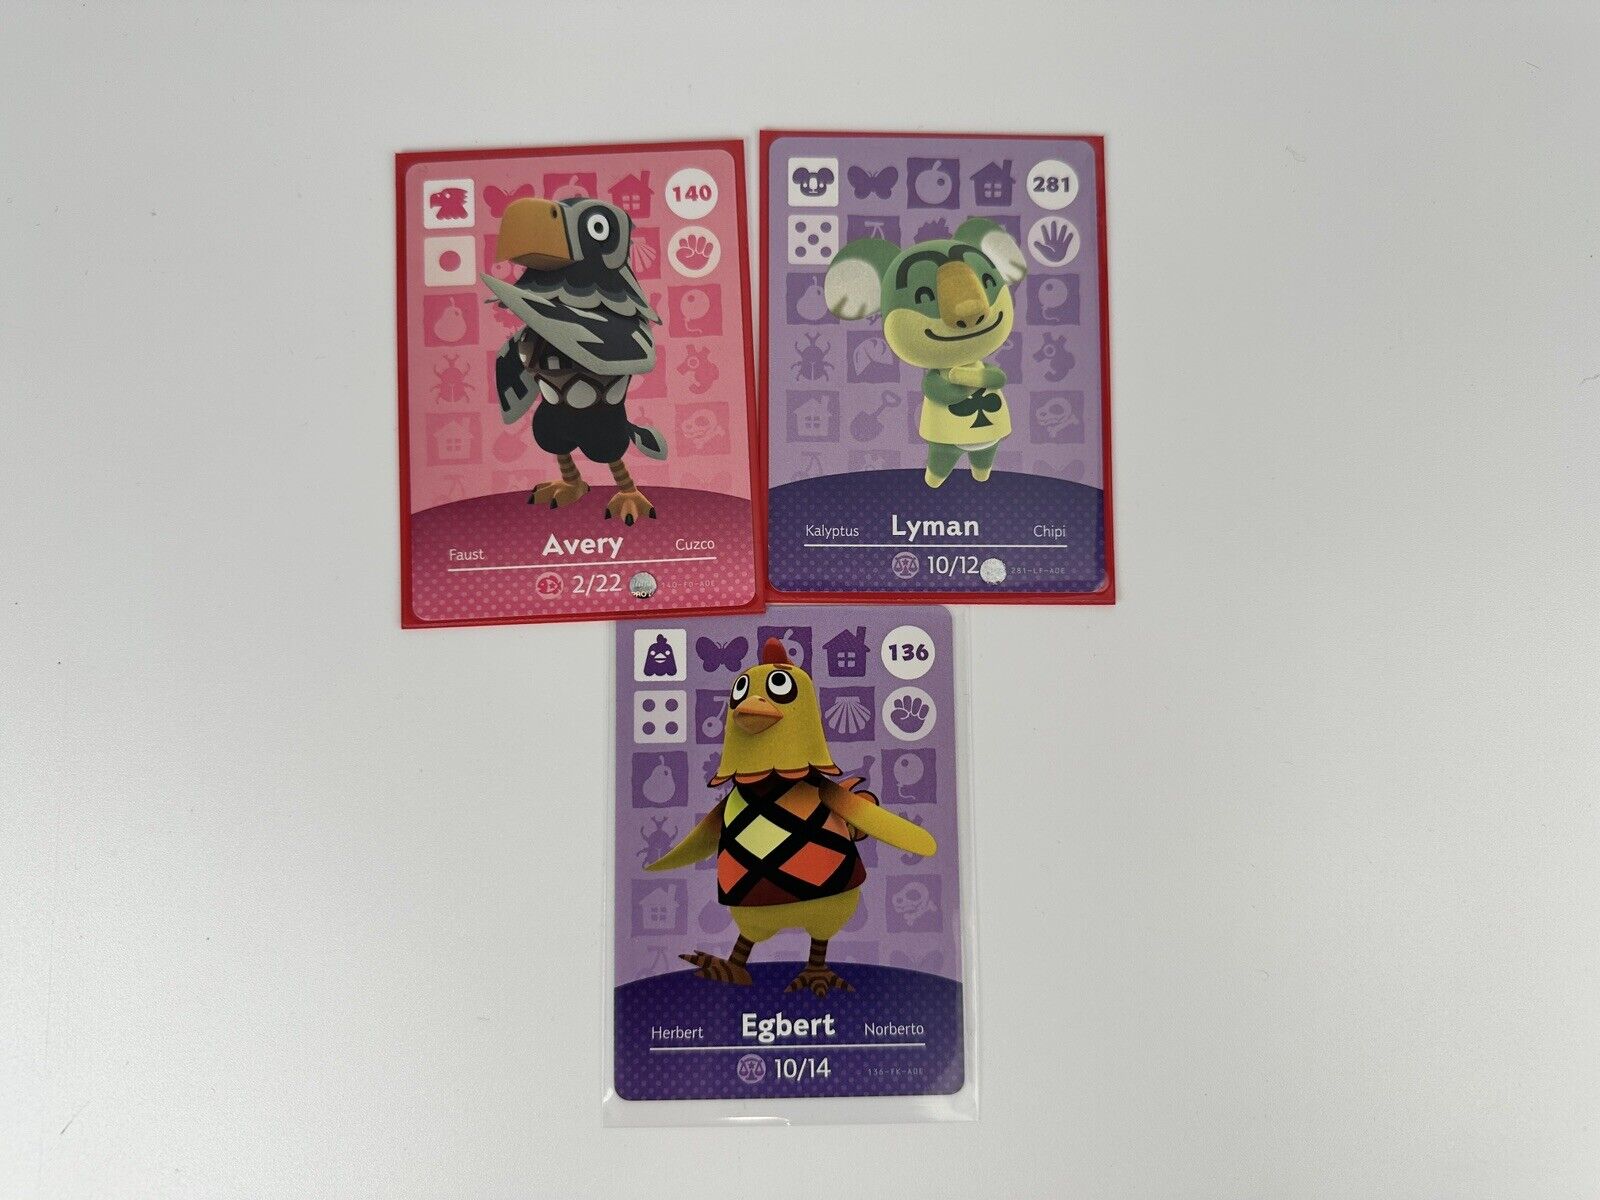 Animal Crossing Amiibo Cards Avery 140 Lyman 281 Egbert 136 Lot Of 3